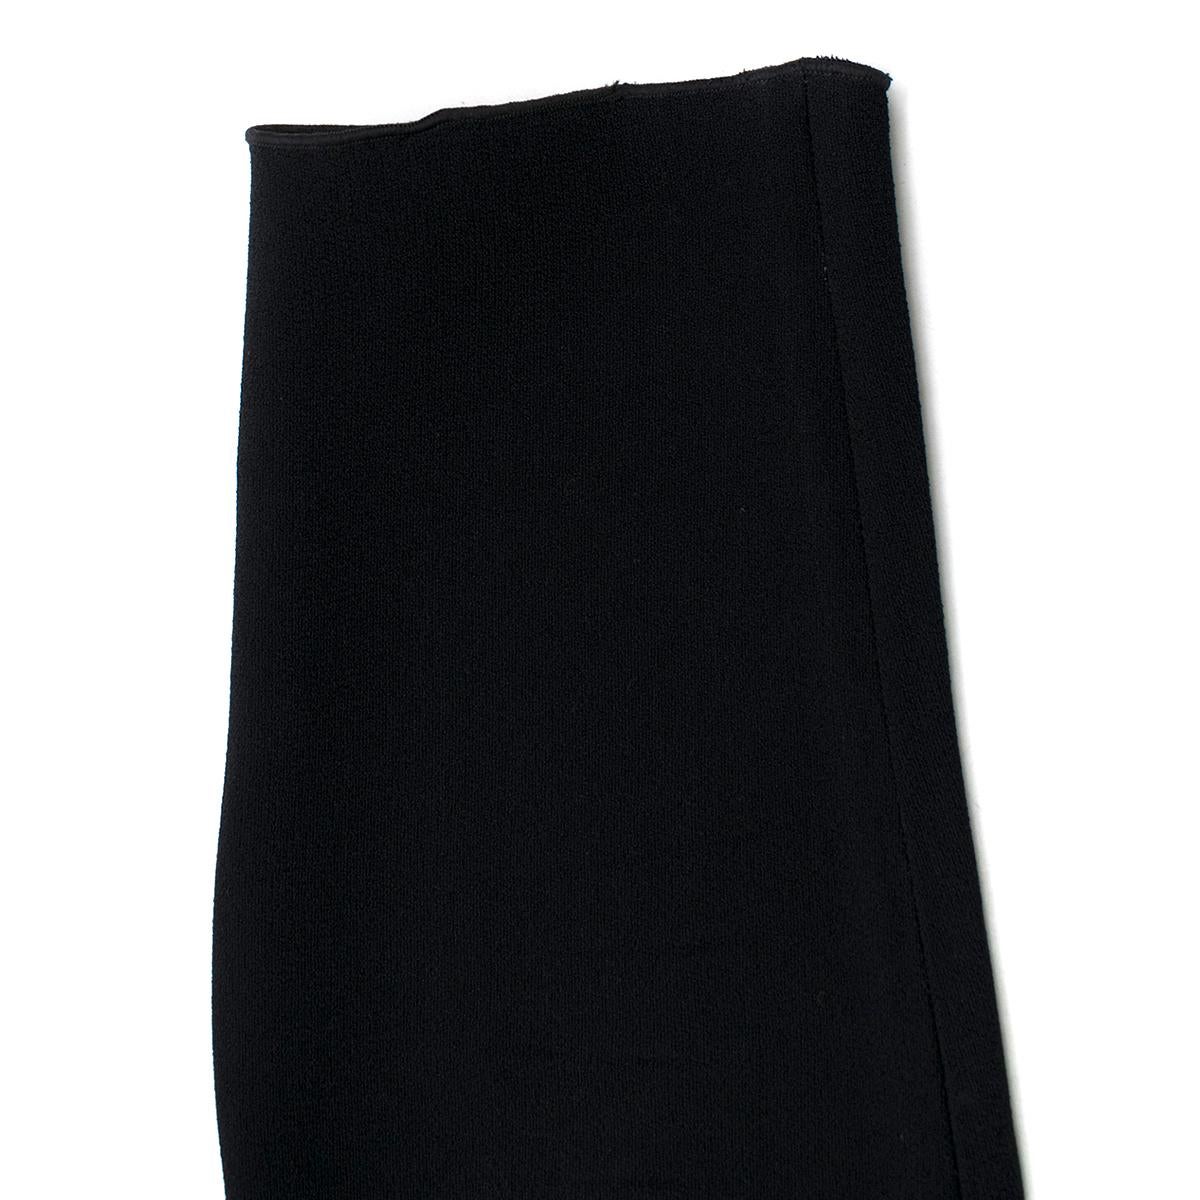 Proenza Schouler Cold-Shoulders Long Sleeved Black Top US 0-2 For Sale 5